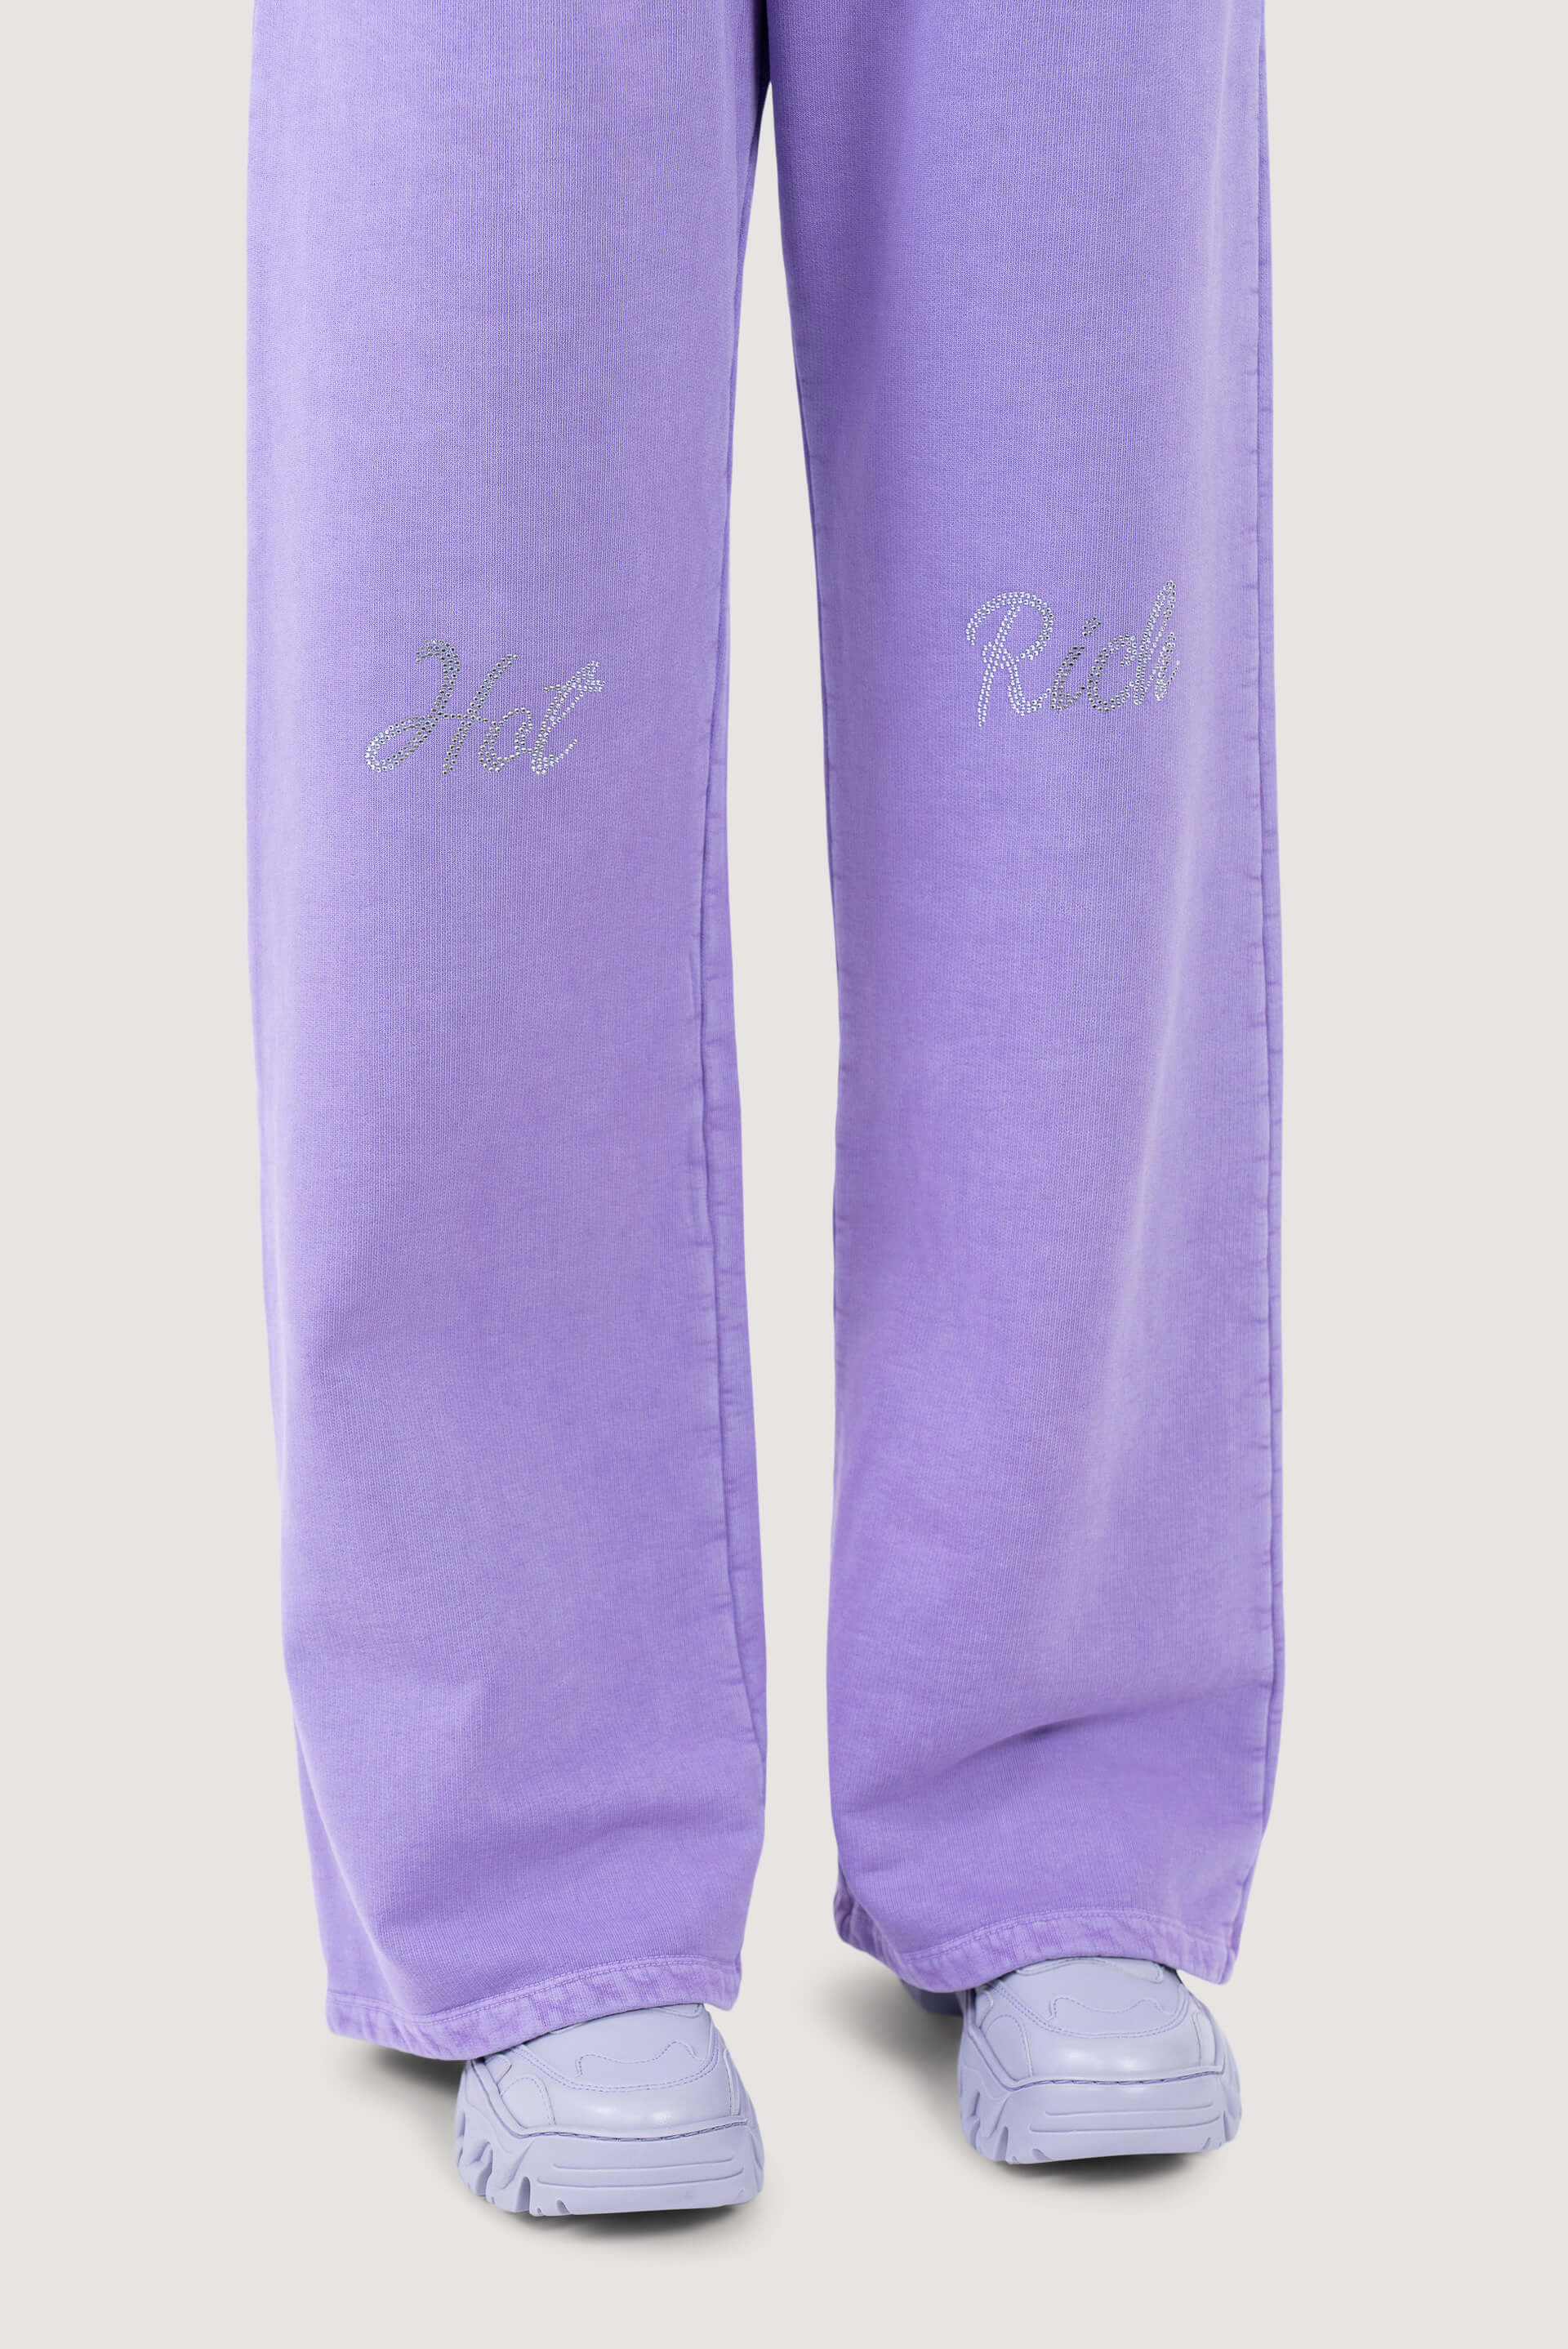 Buy OKANE Women Cotton Regular Fit Purple Track Pants at Amazon.in